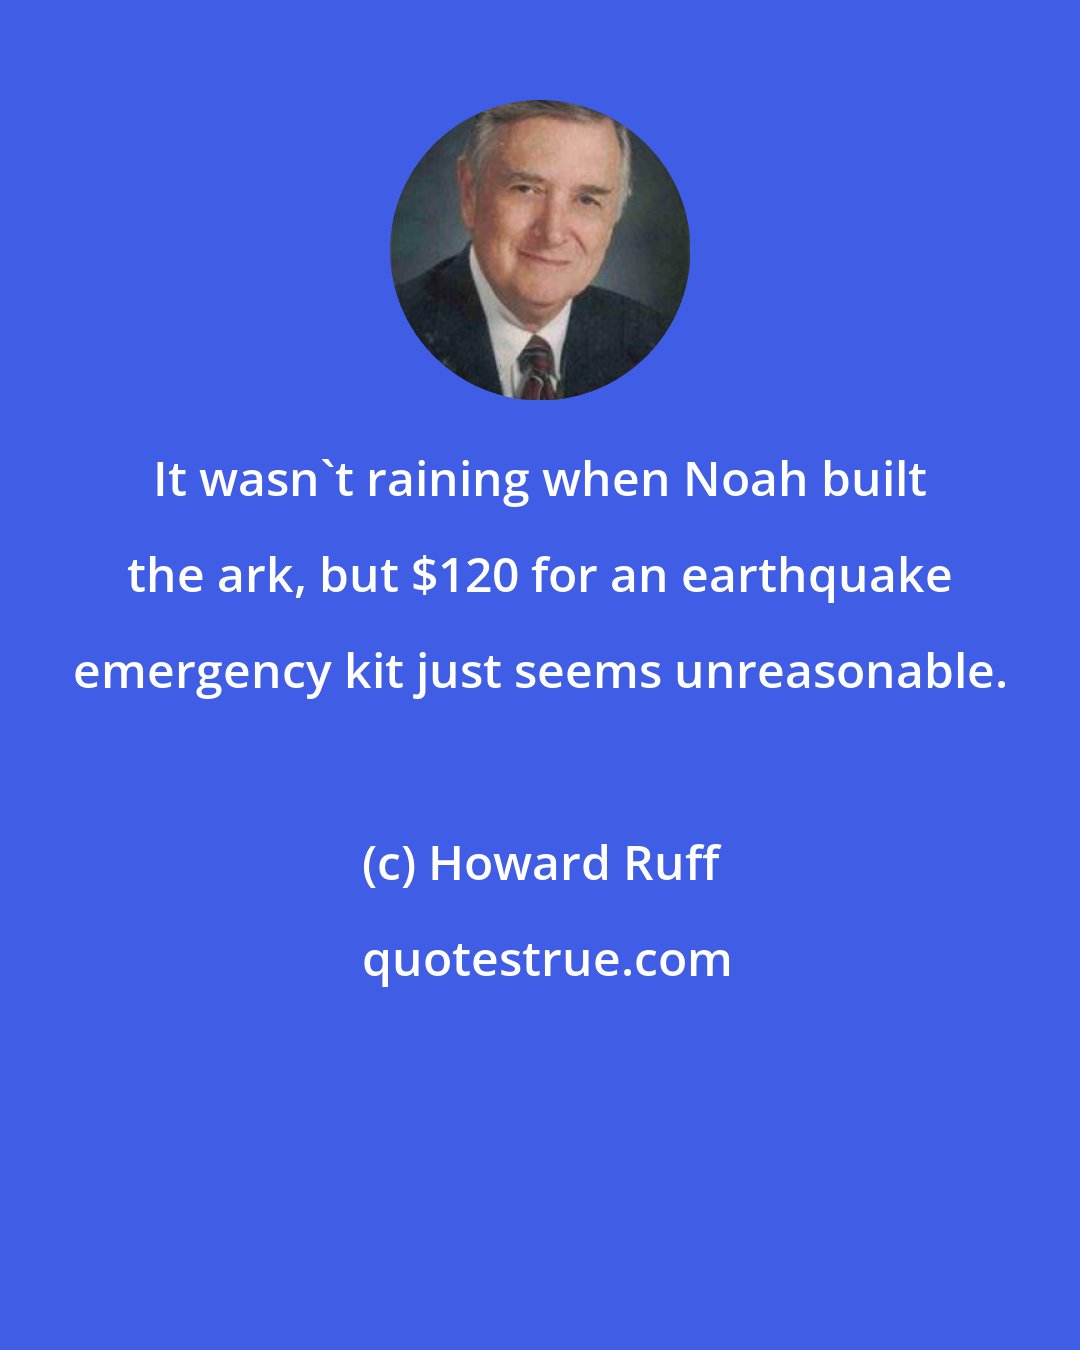 Howard Ruff: It wasn't raining when Noah built the ark, but $120 for an earthquake emergency kit just seems unreasonable.